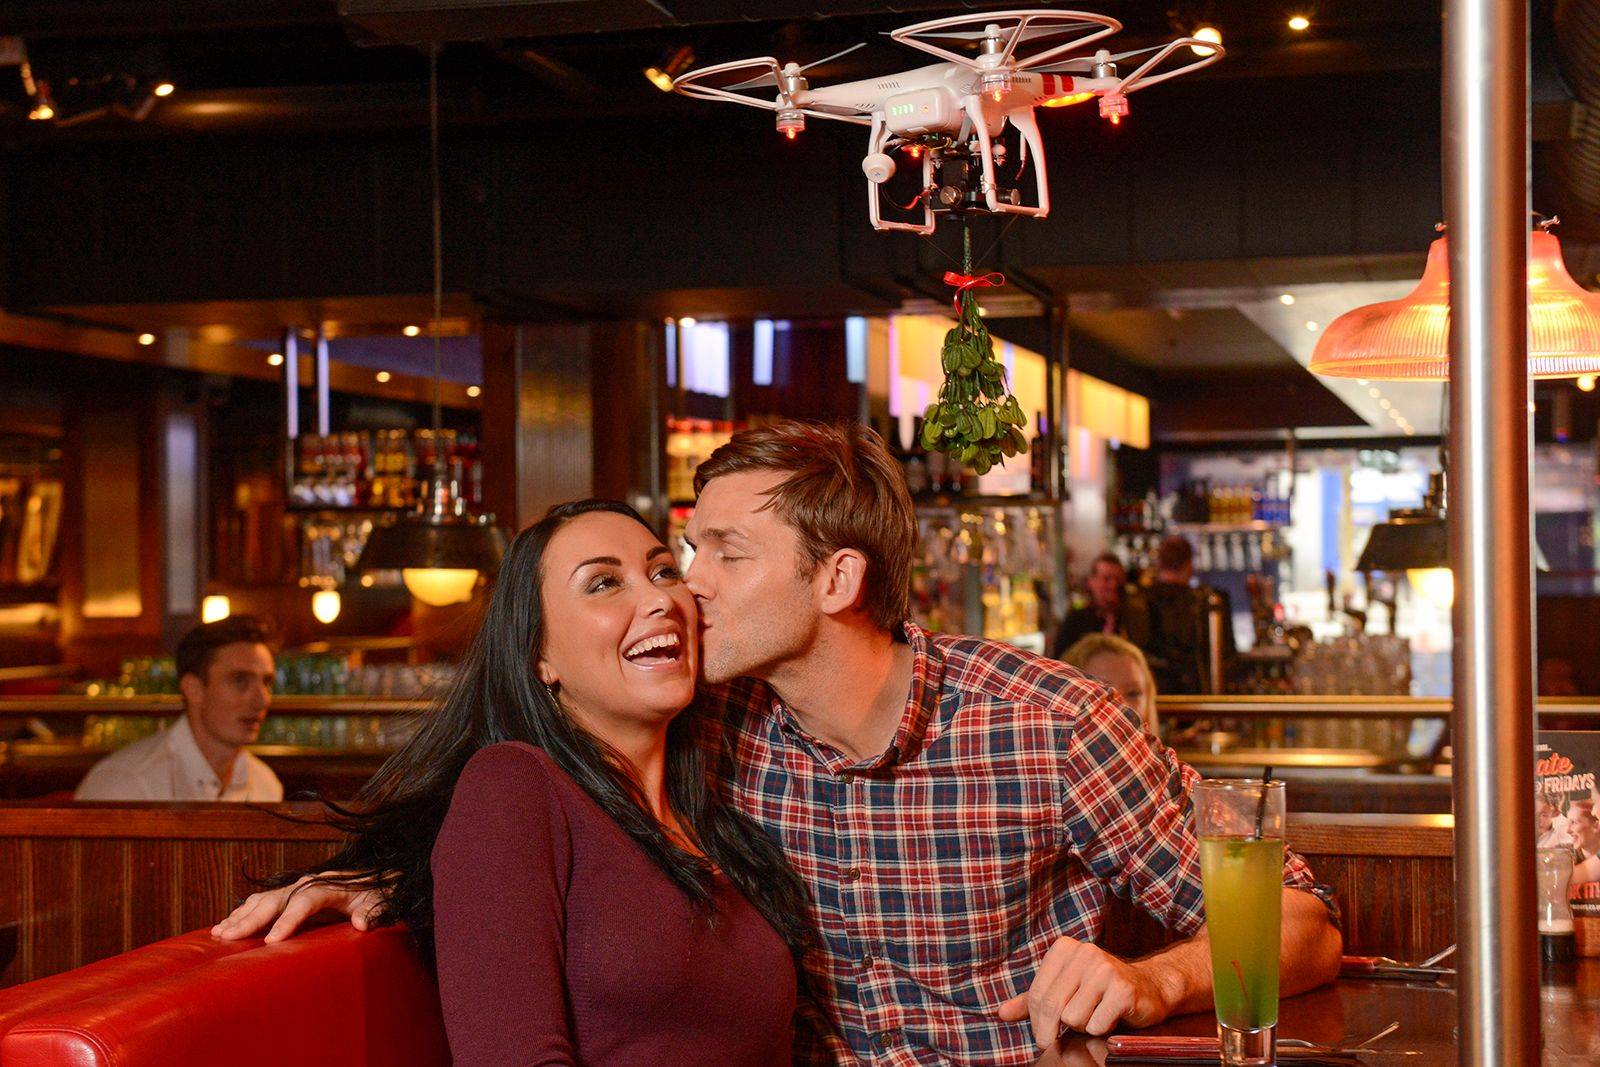 crazy christmas pr stunt 221 mistletoe drone for kiss happy tgi fridays customers image 1